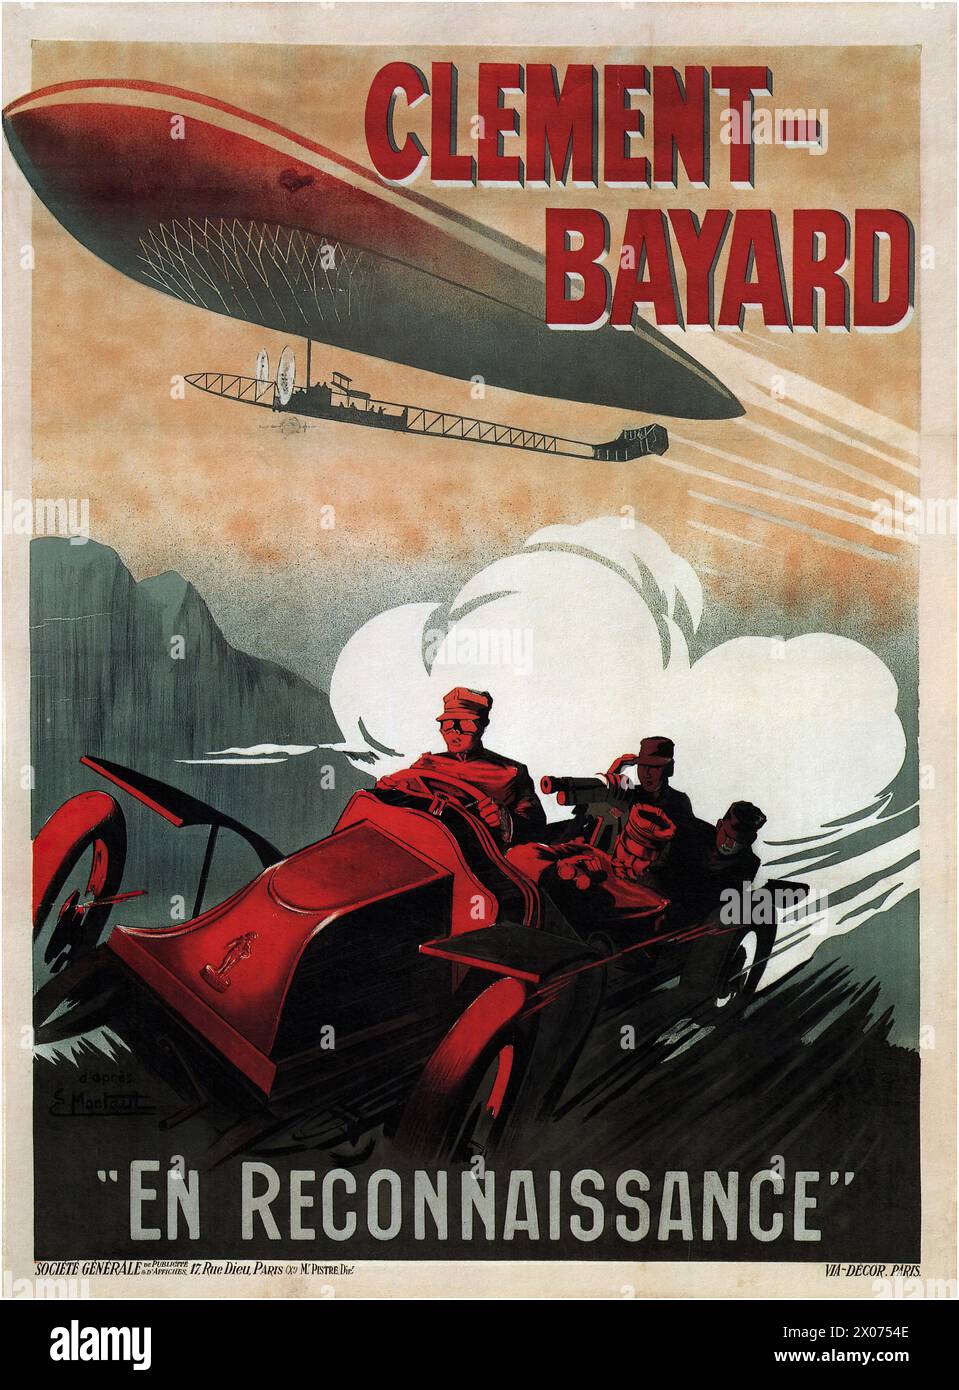 Clement-Bayard. 1915 - poster pubblicitario Foto Stock